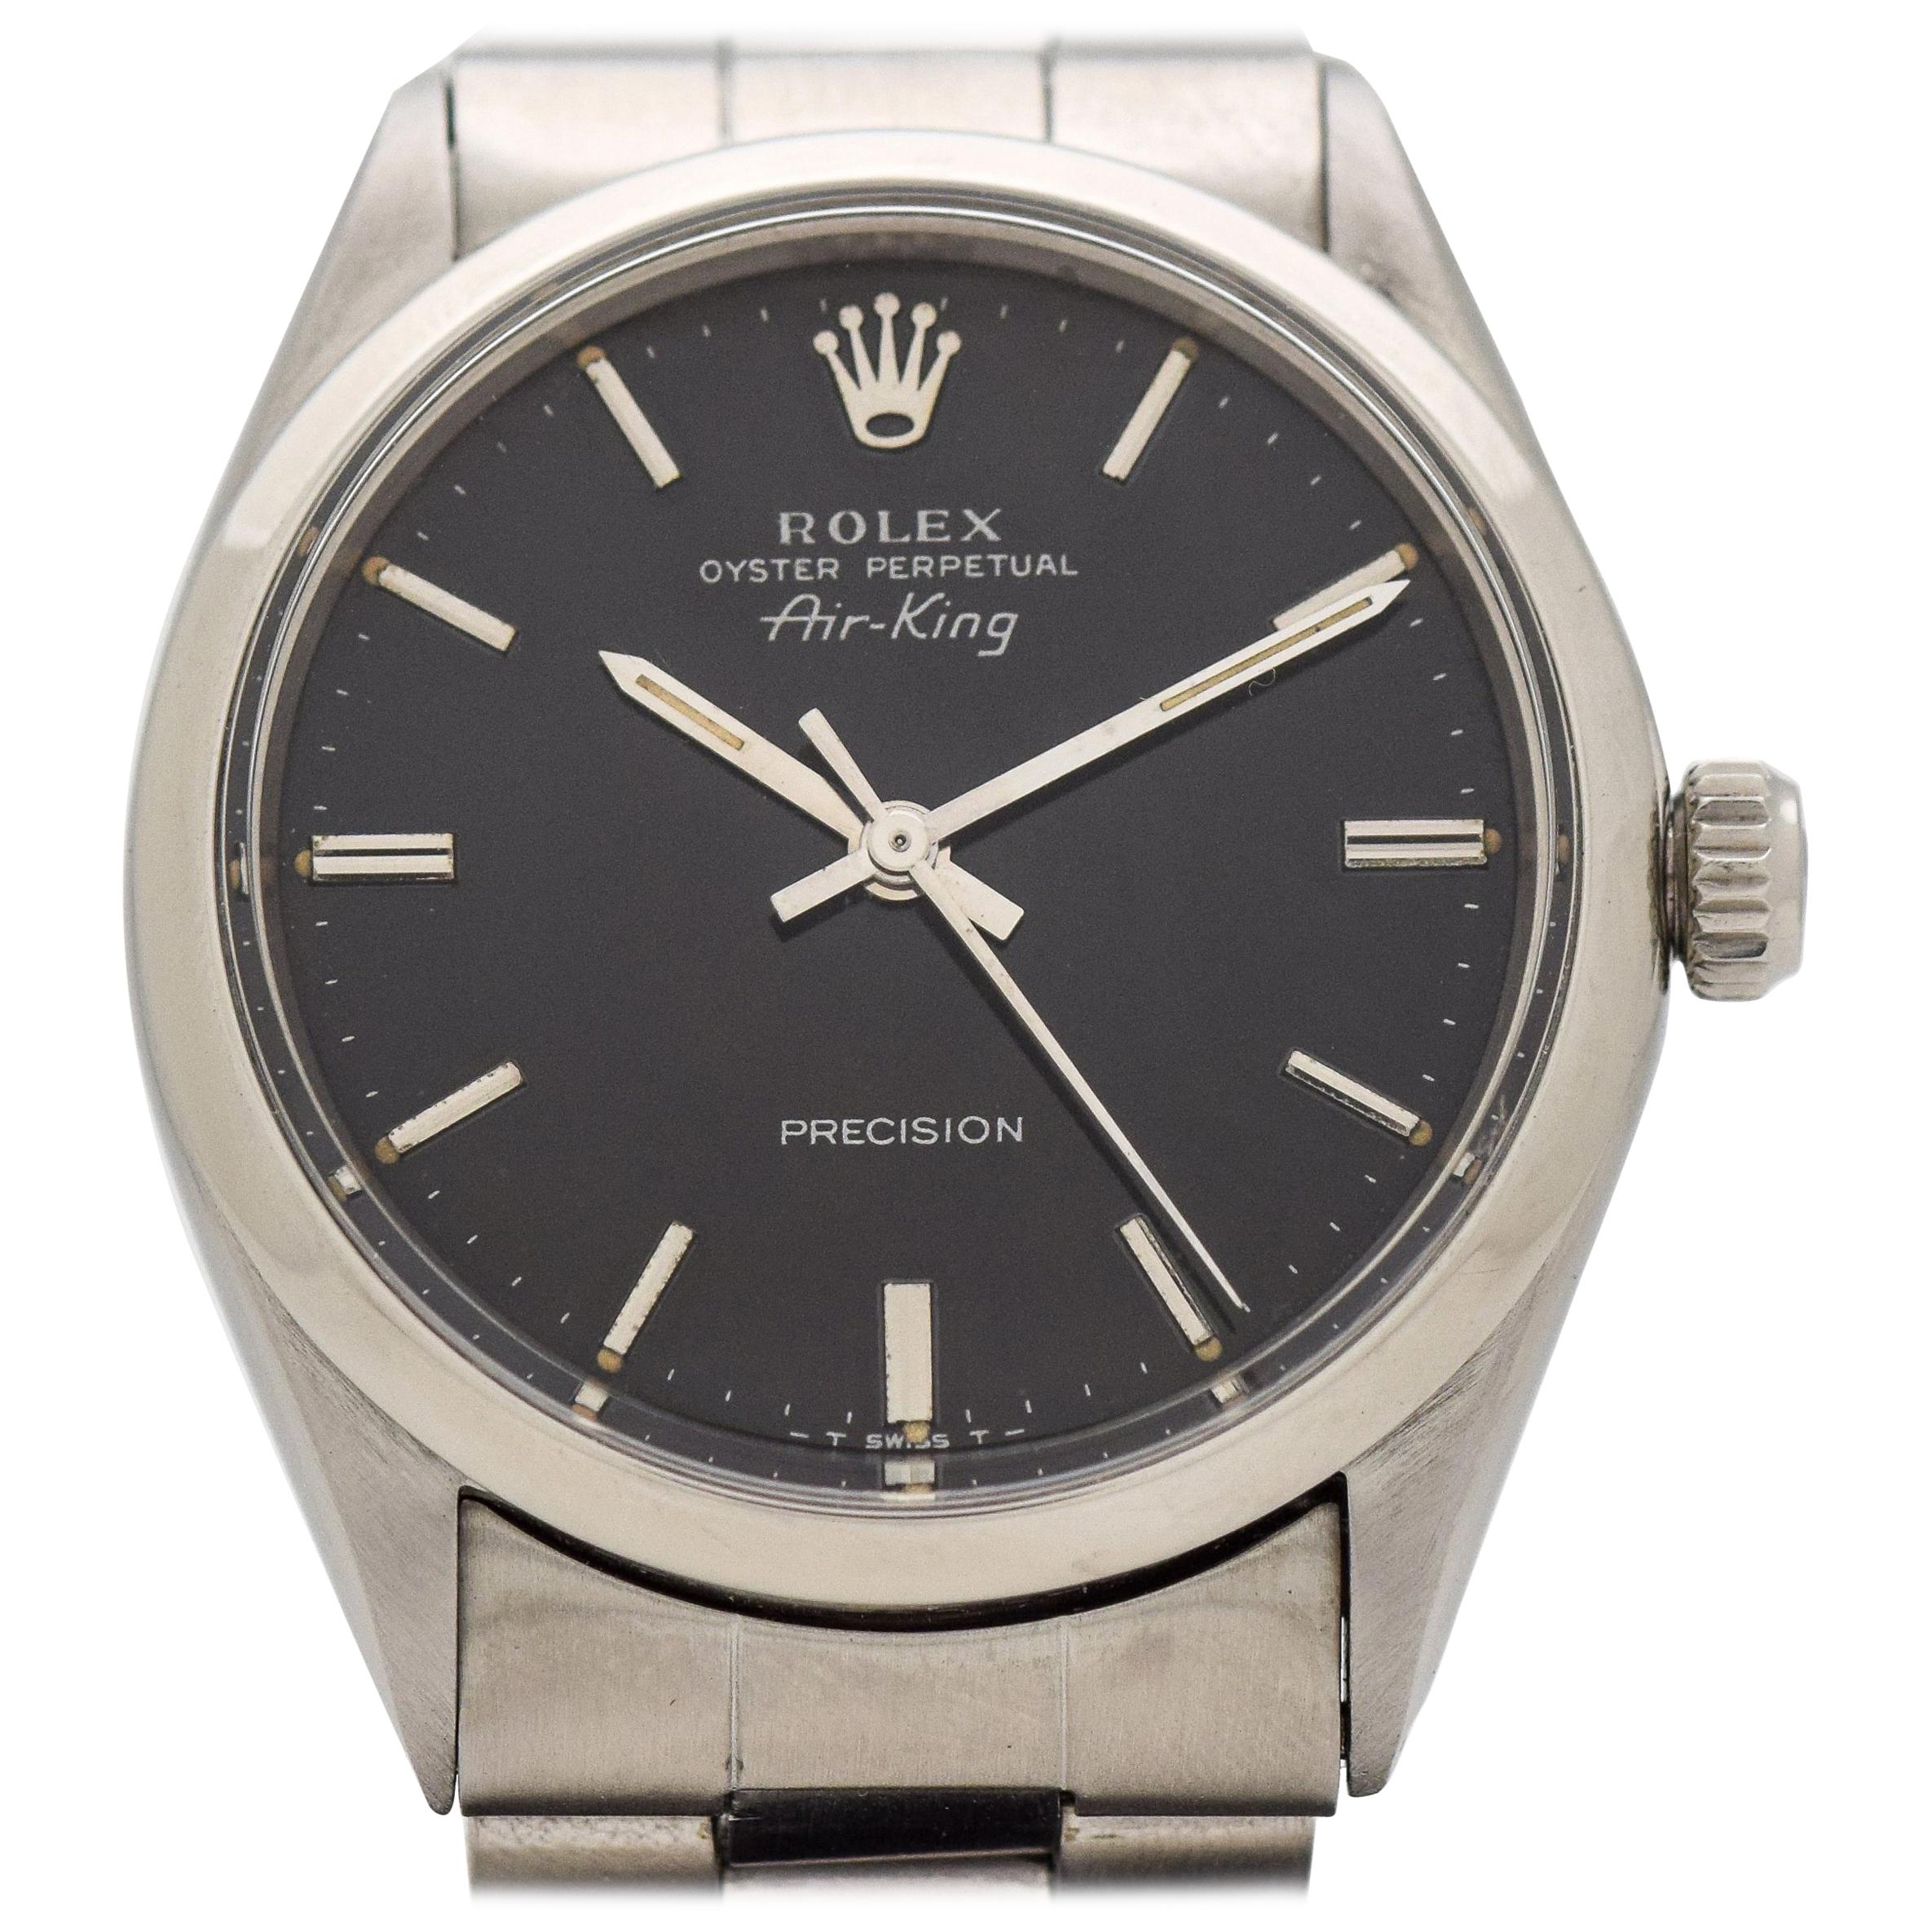 Vintage Rolex Air-King Ref. 5500/1002 Stainless Steel Watch, 1970